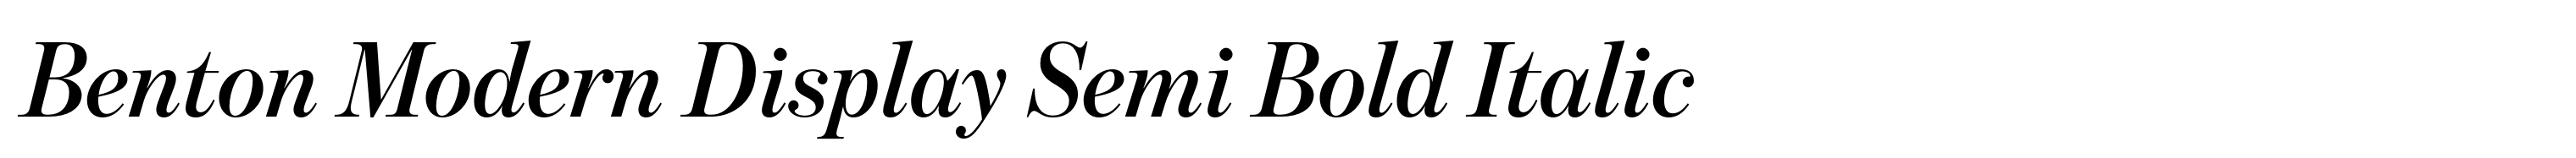 Benton Modern Display Semi Bold Italic